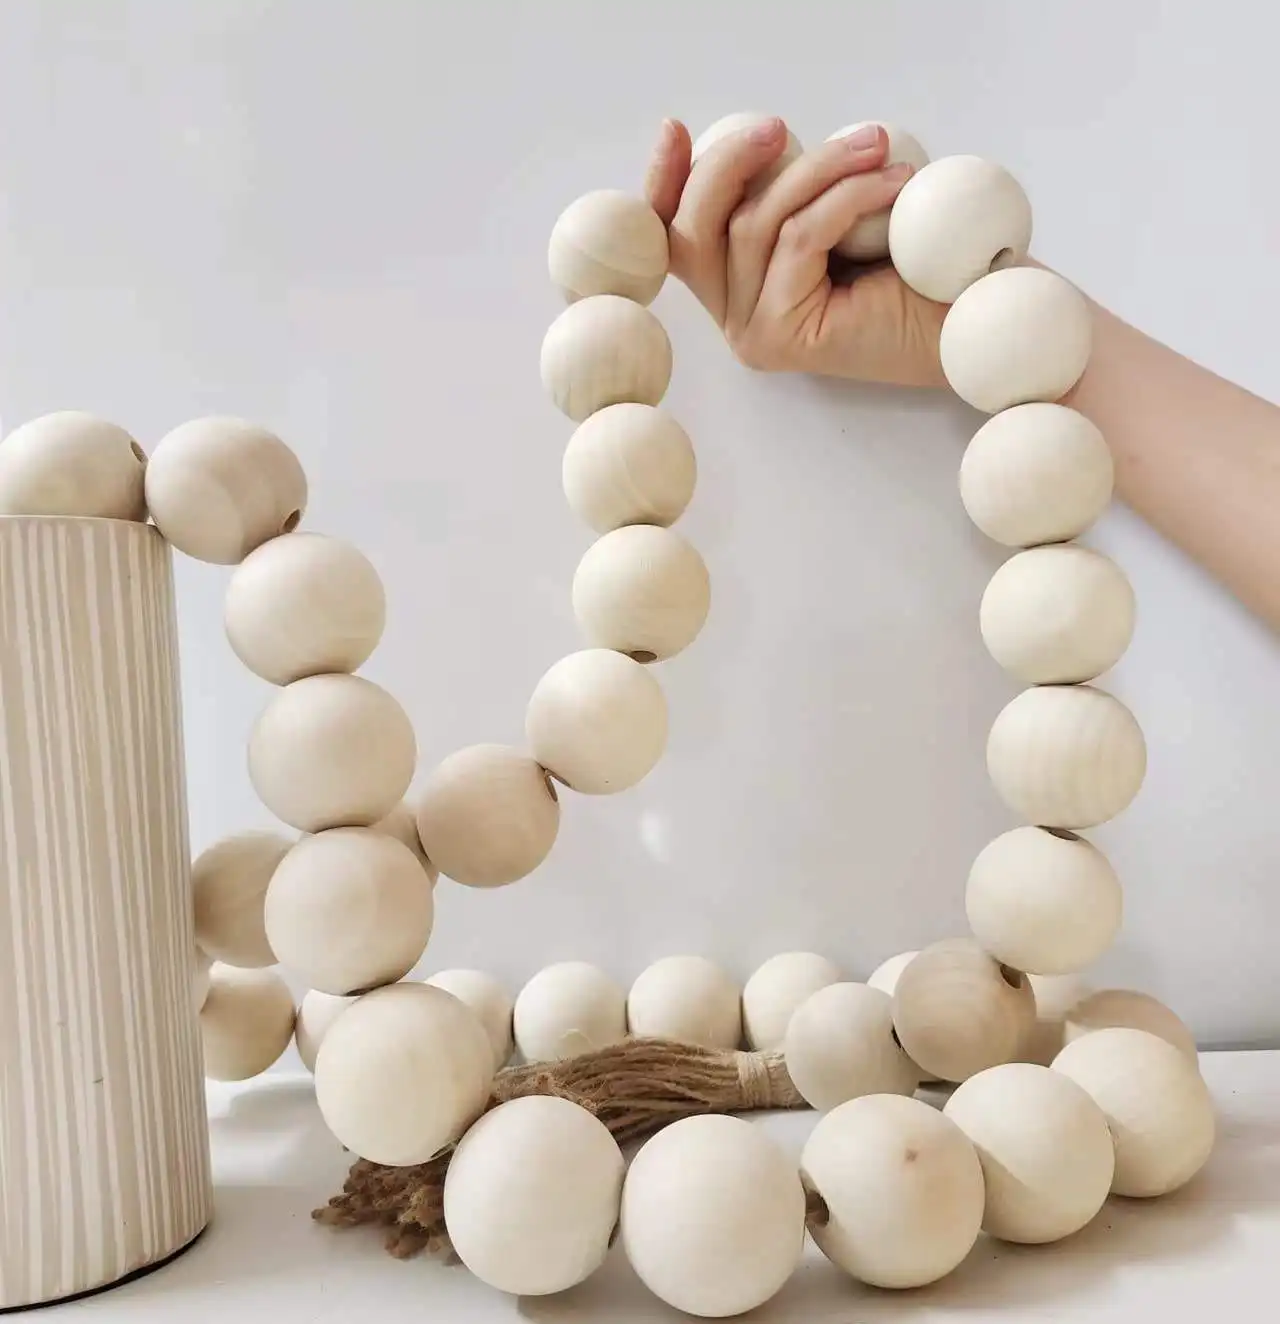 Grande guirlande de perles en bois de 76 pouces avec des glands de perles en bois de 1.6 po de diamètre